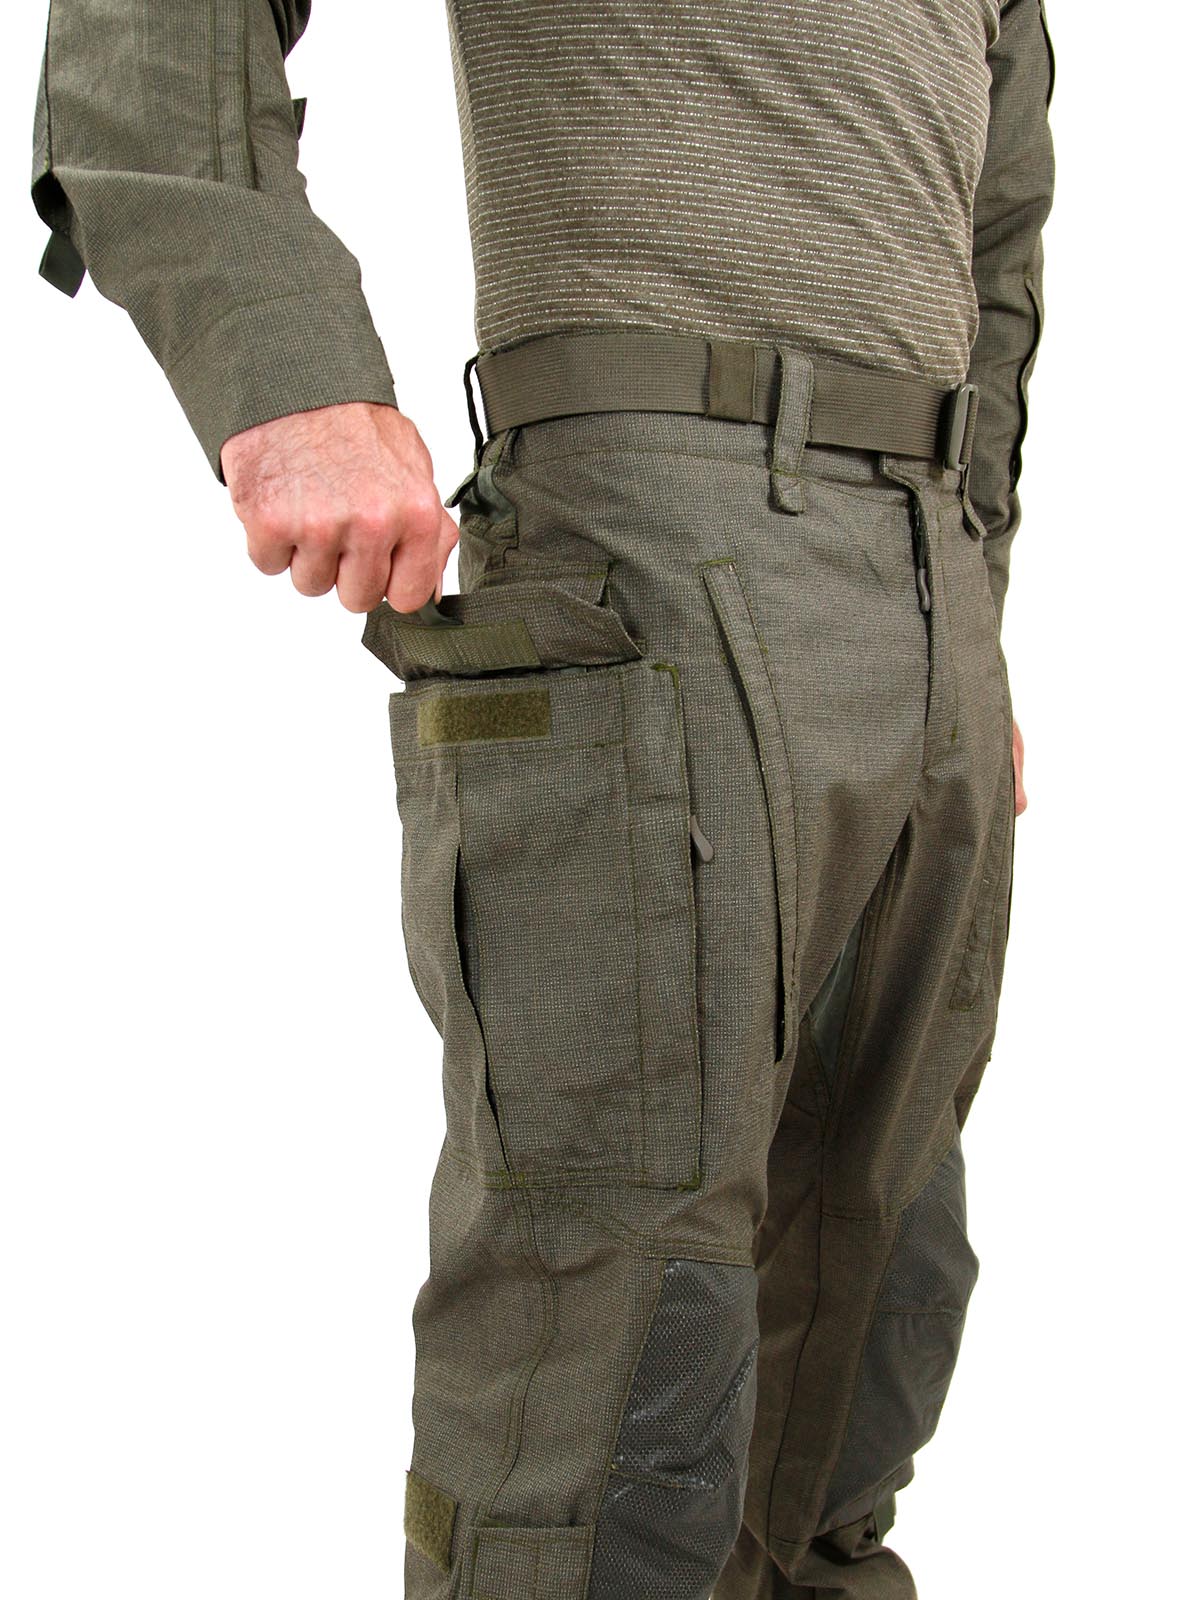 Buy CARWORNIC Gear Mens Assault Tactical Pants Lightweight Cotton Outdoor  Military Combat Cargo Trousers 30W x 30L Khaki at Amazonin